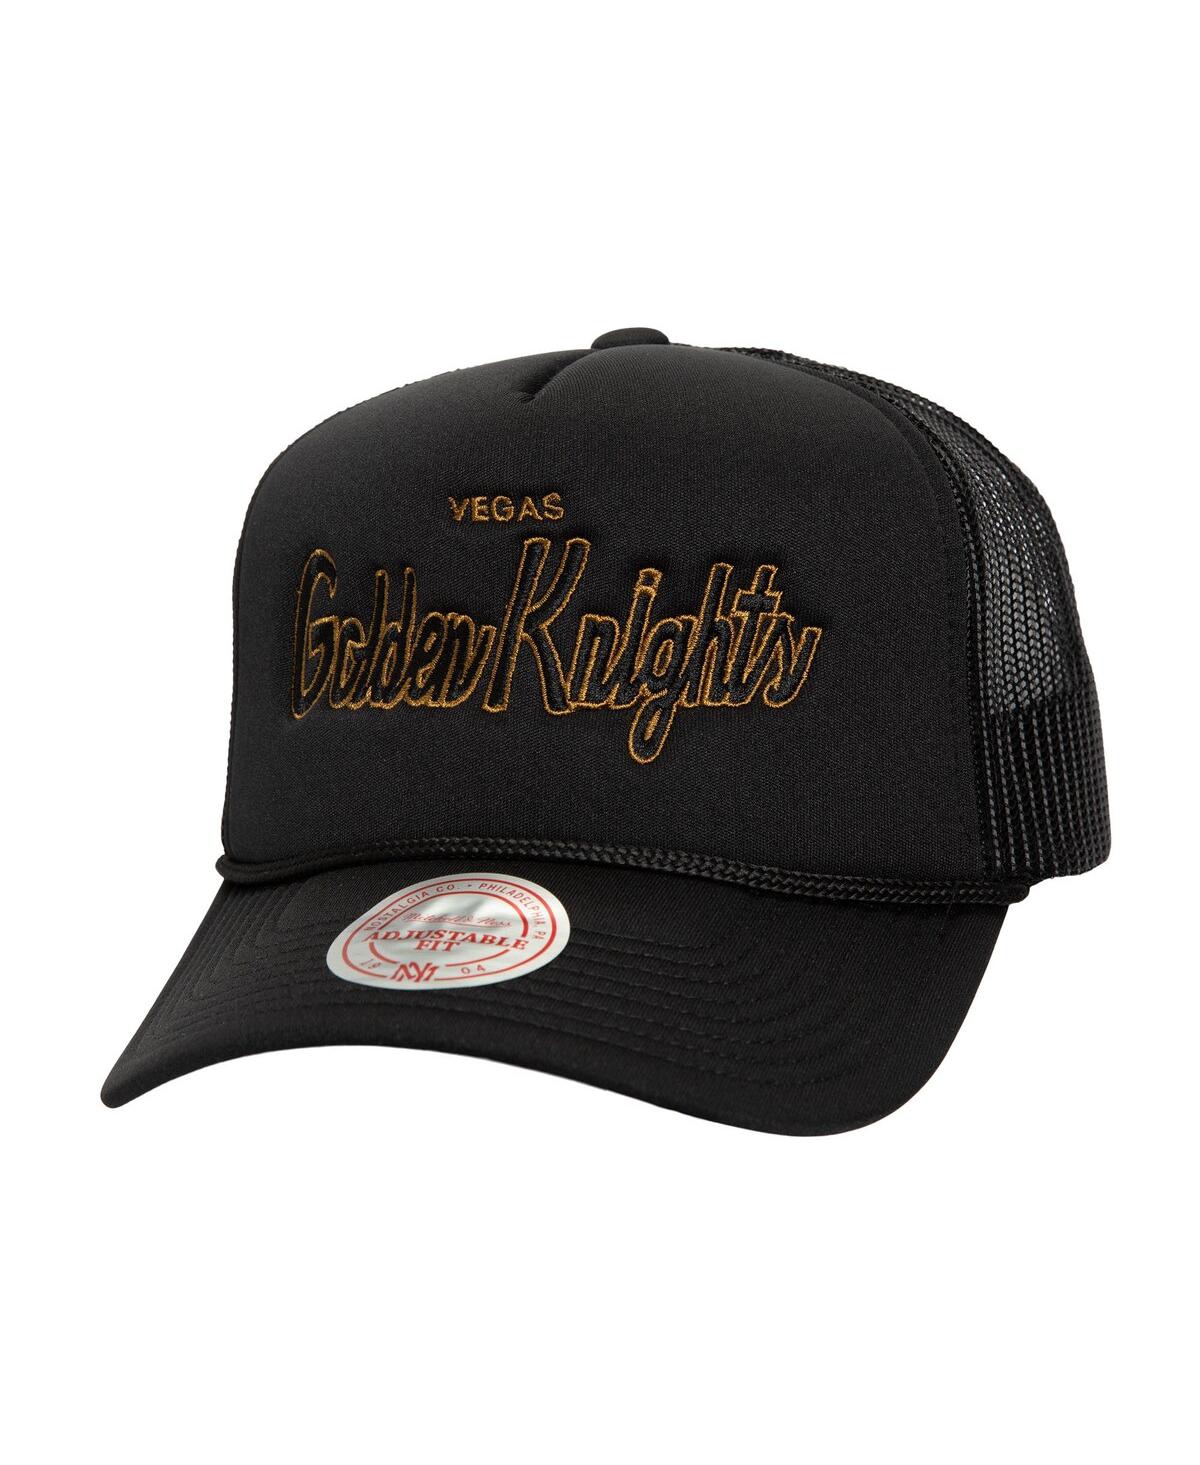 Mitchell Ness Men's Black Vegas Golden Knights Script Side Patch Trucker Adjustable Hat - Black